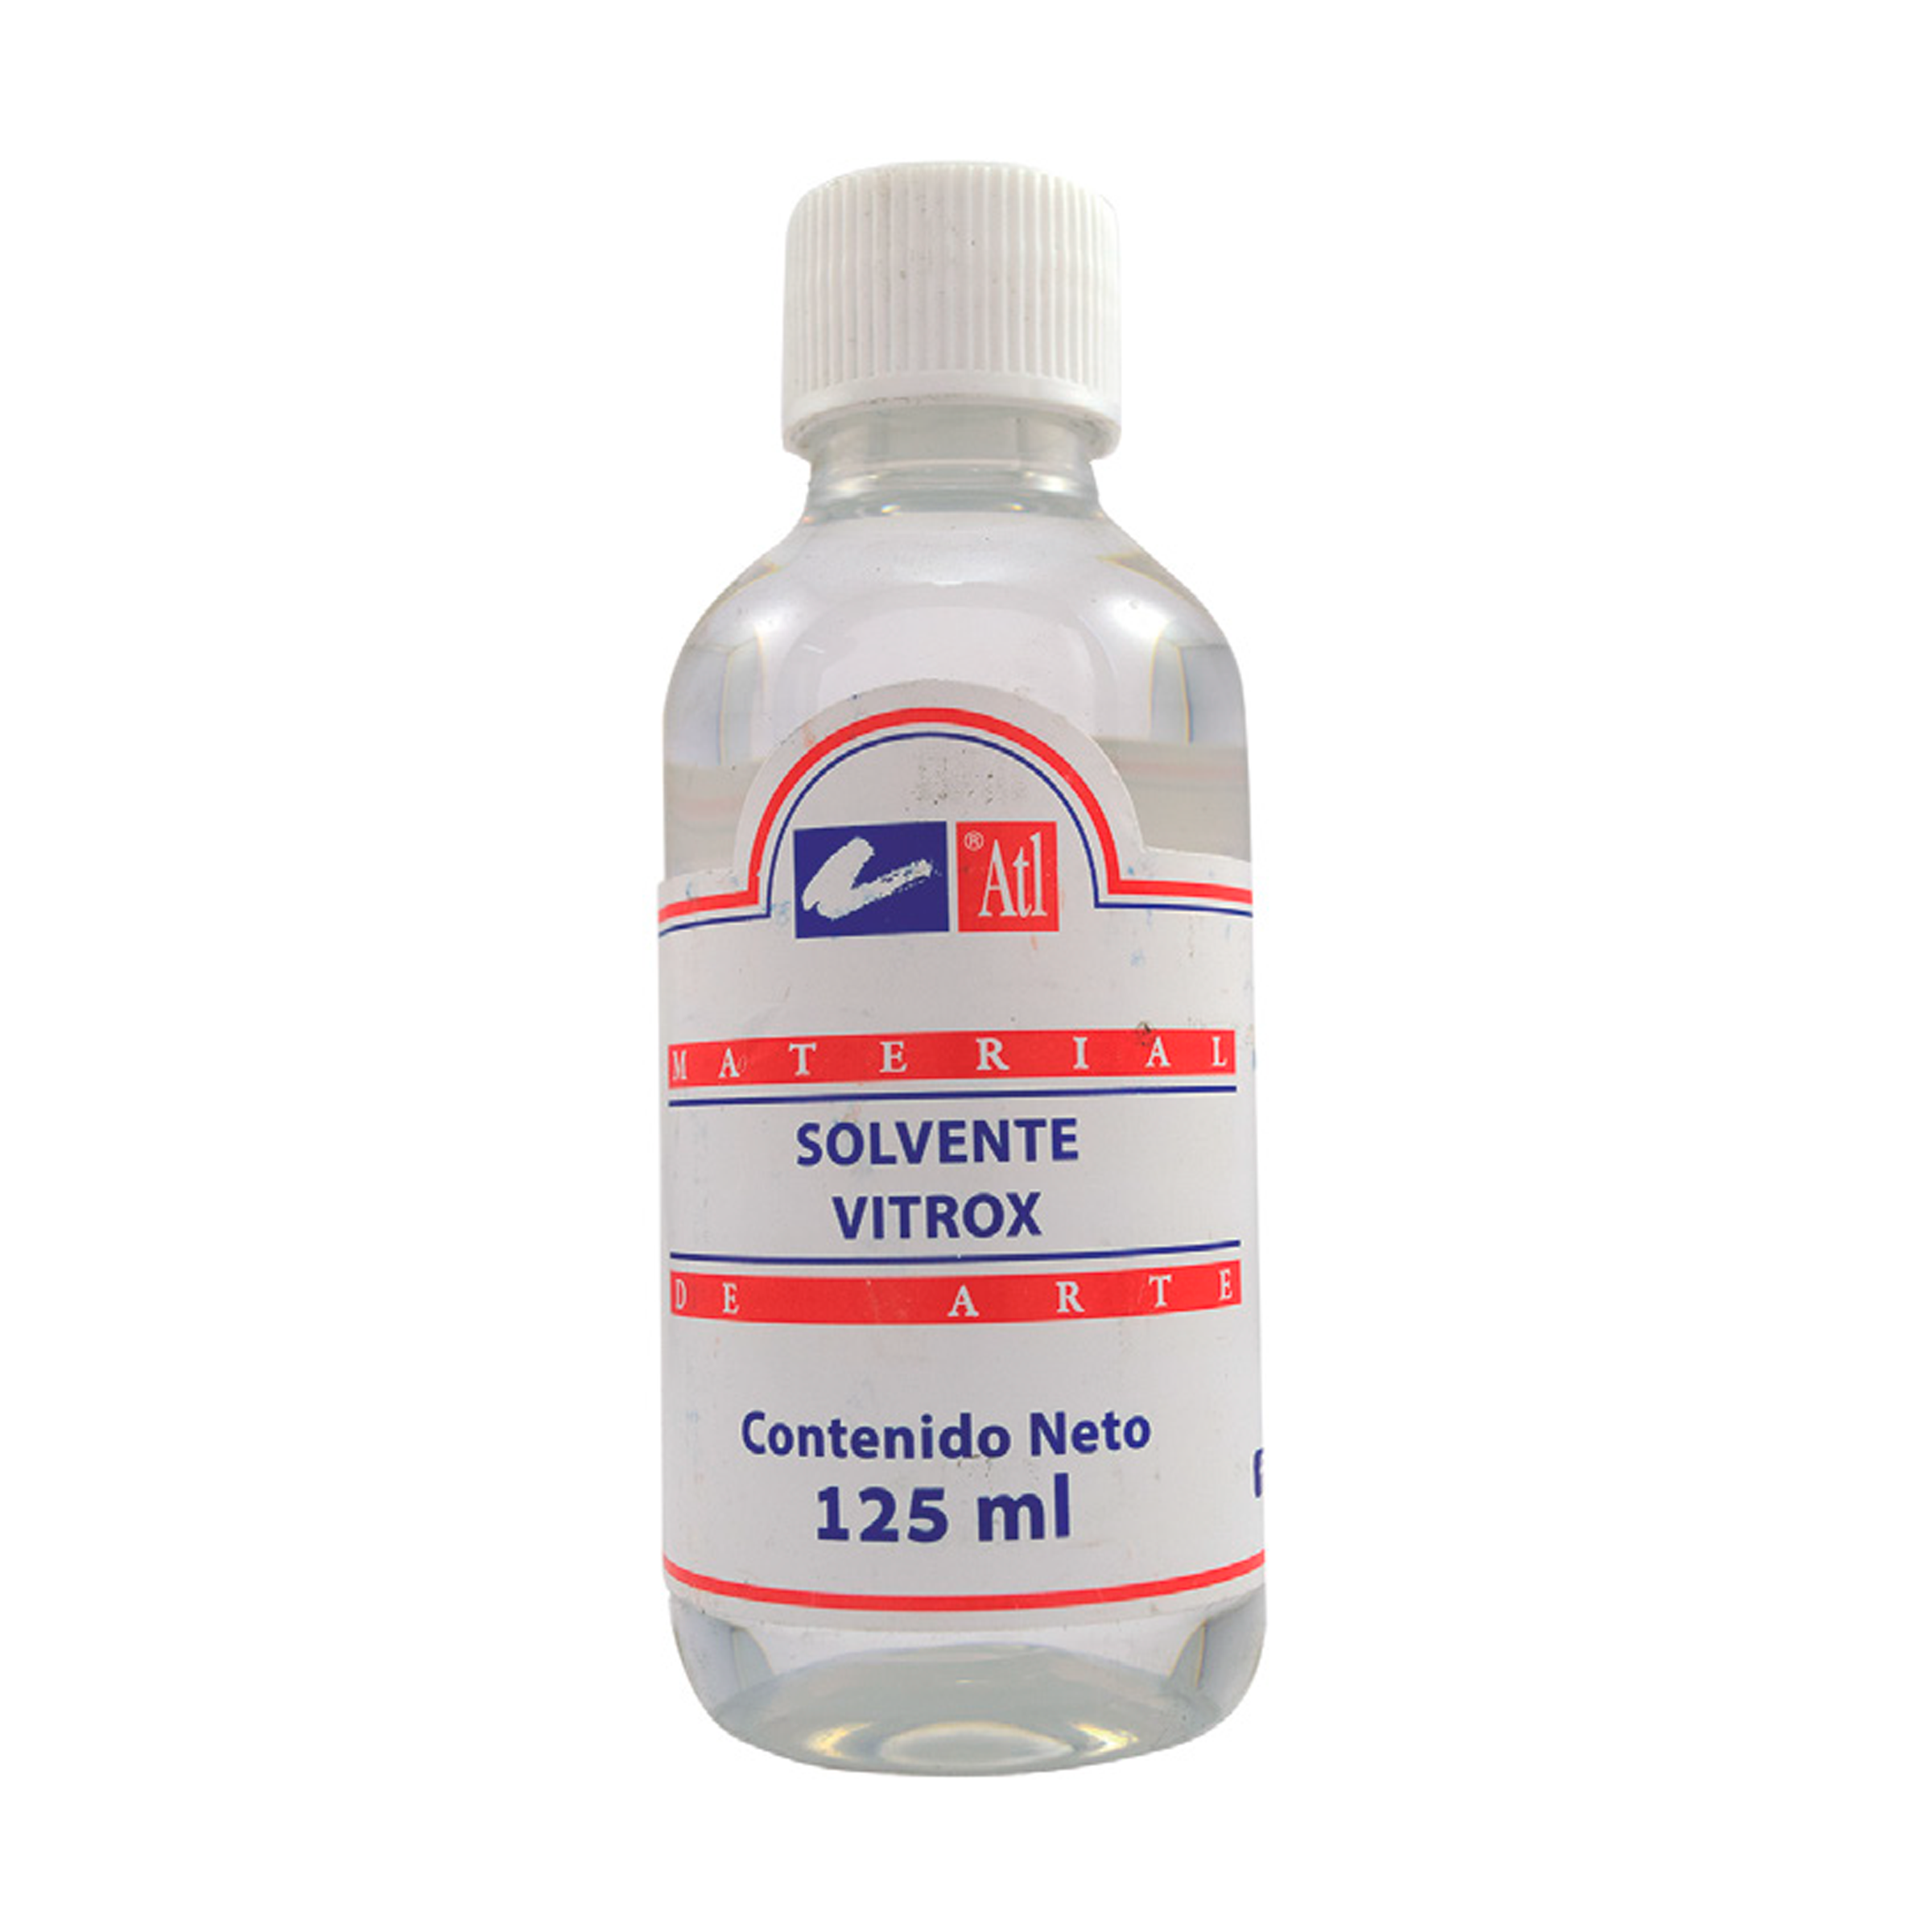 ATL - Solvente vitrox